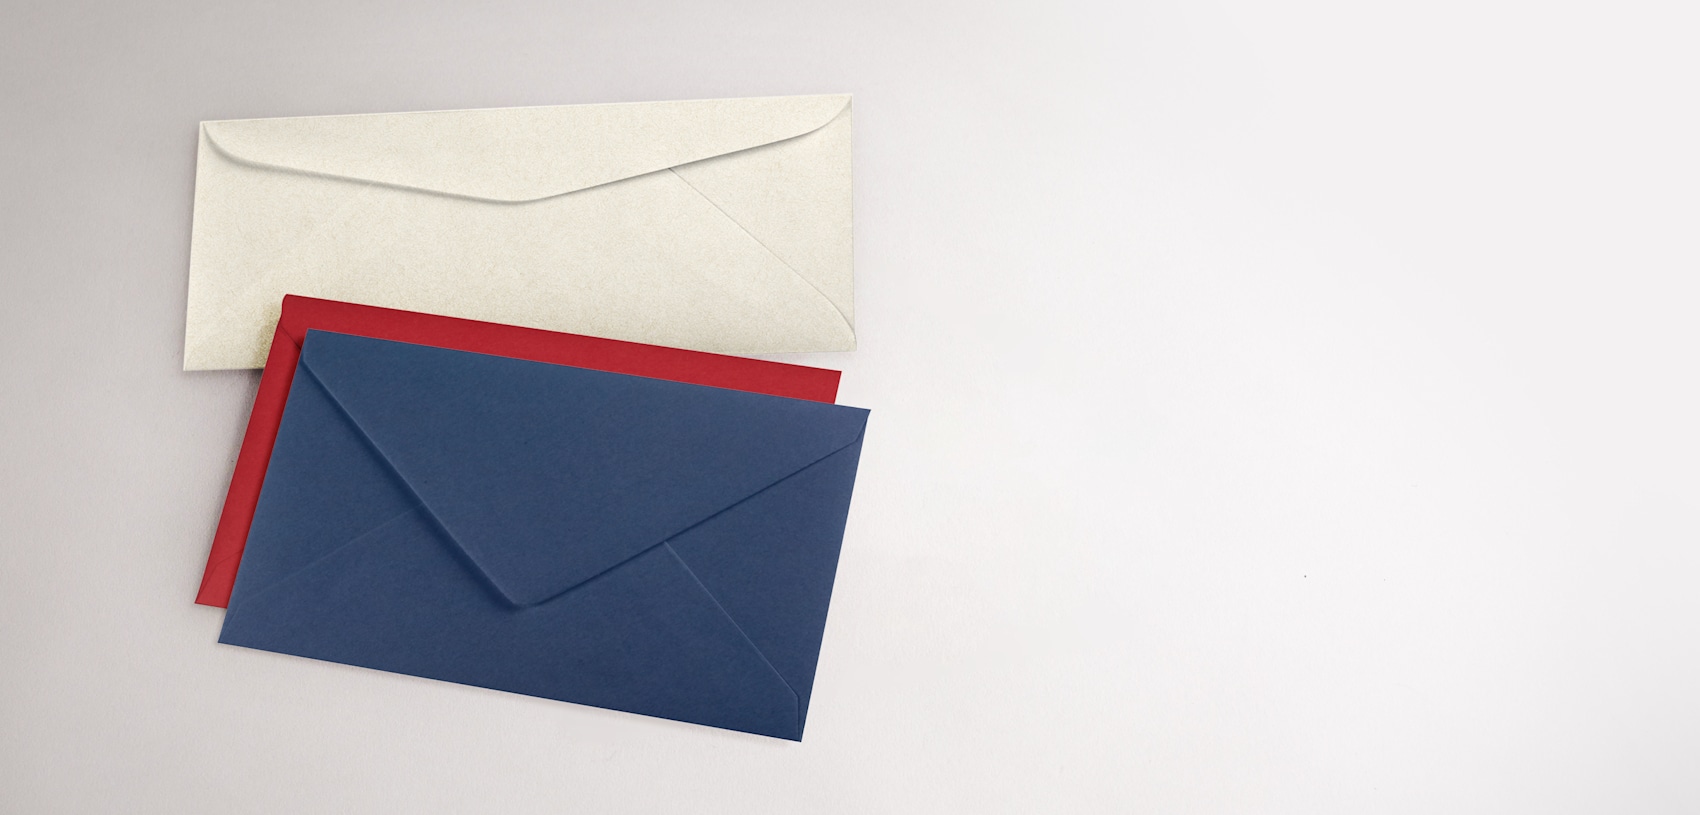 Larger version: colourful envelopes